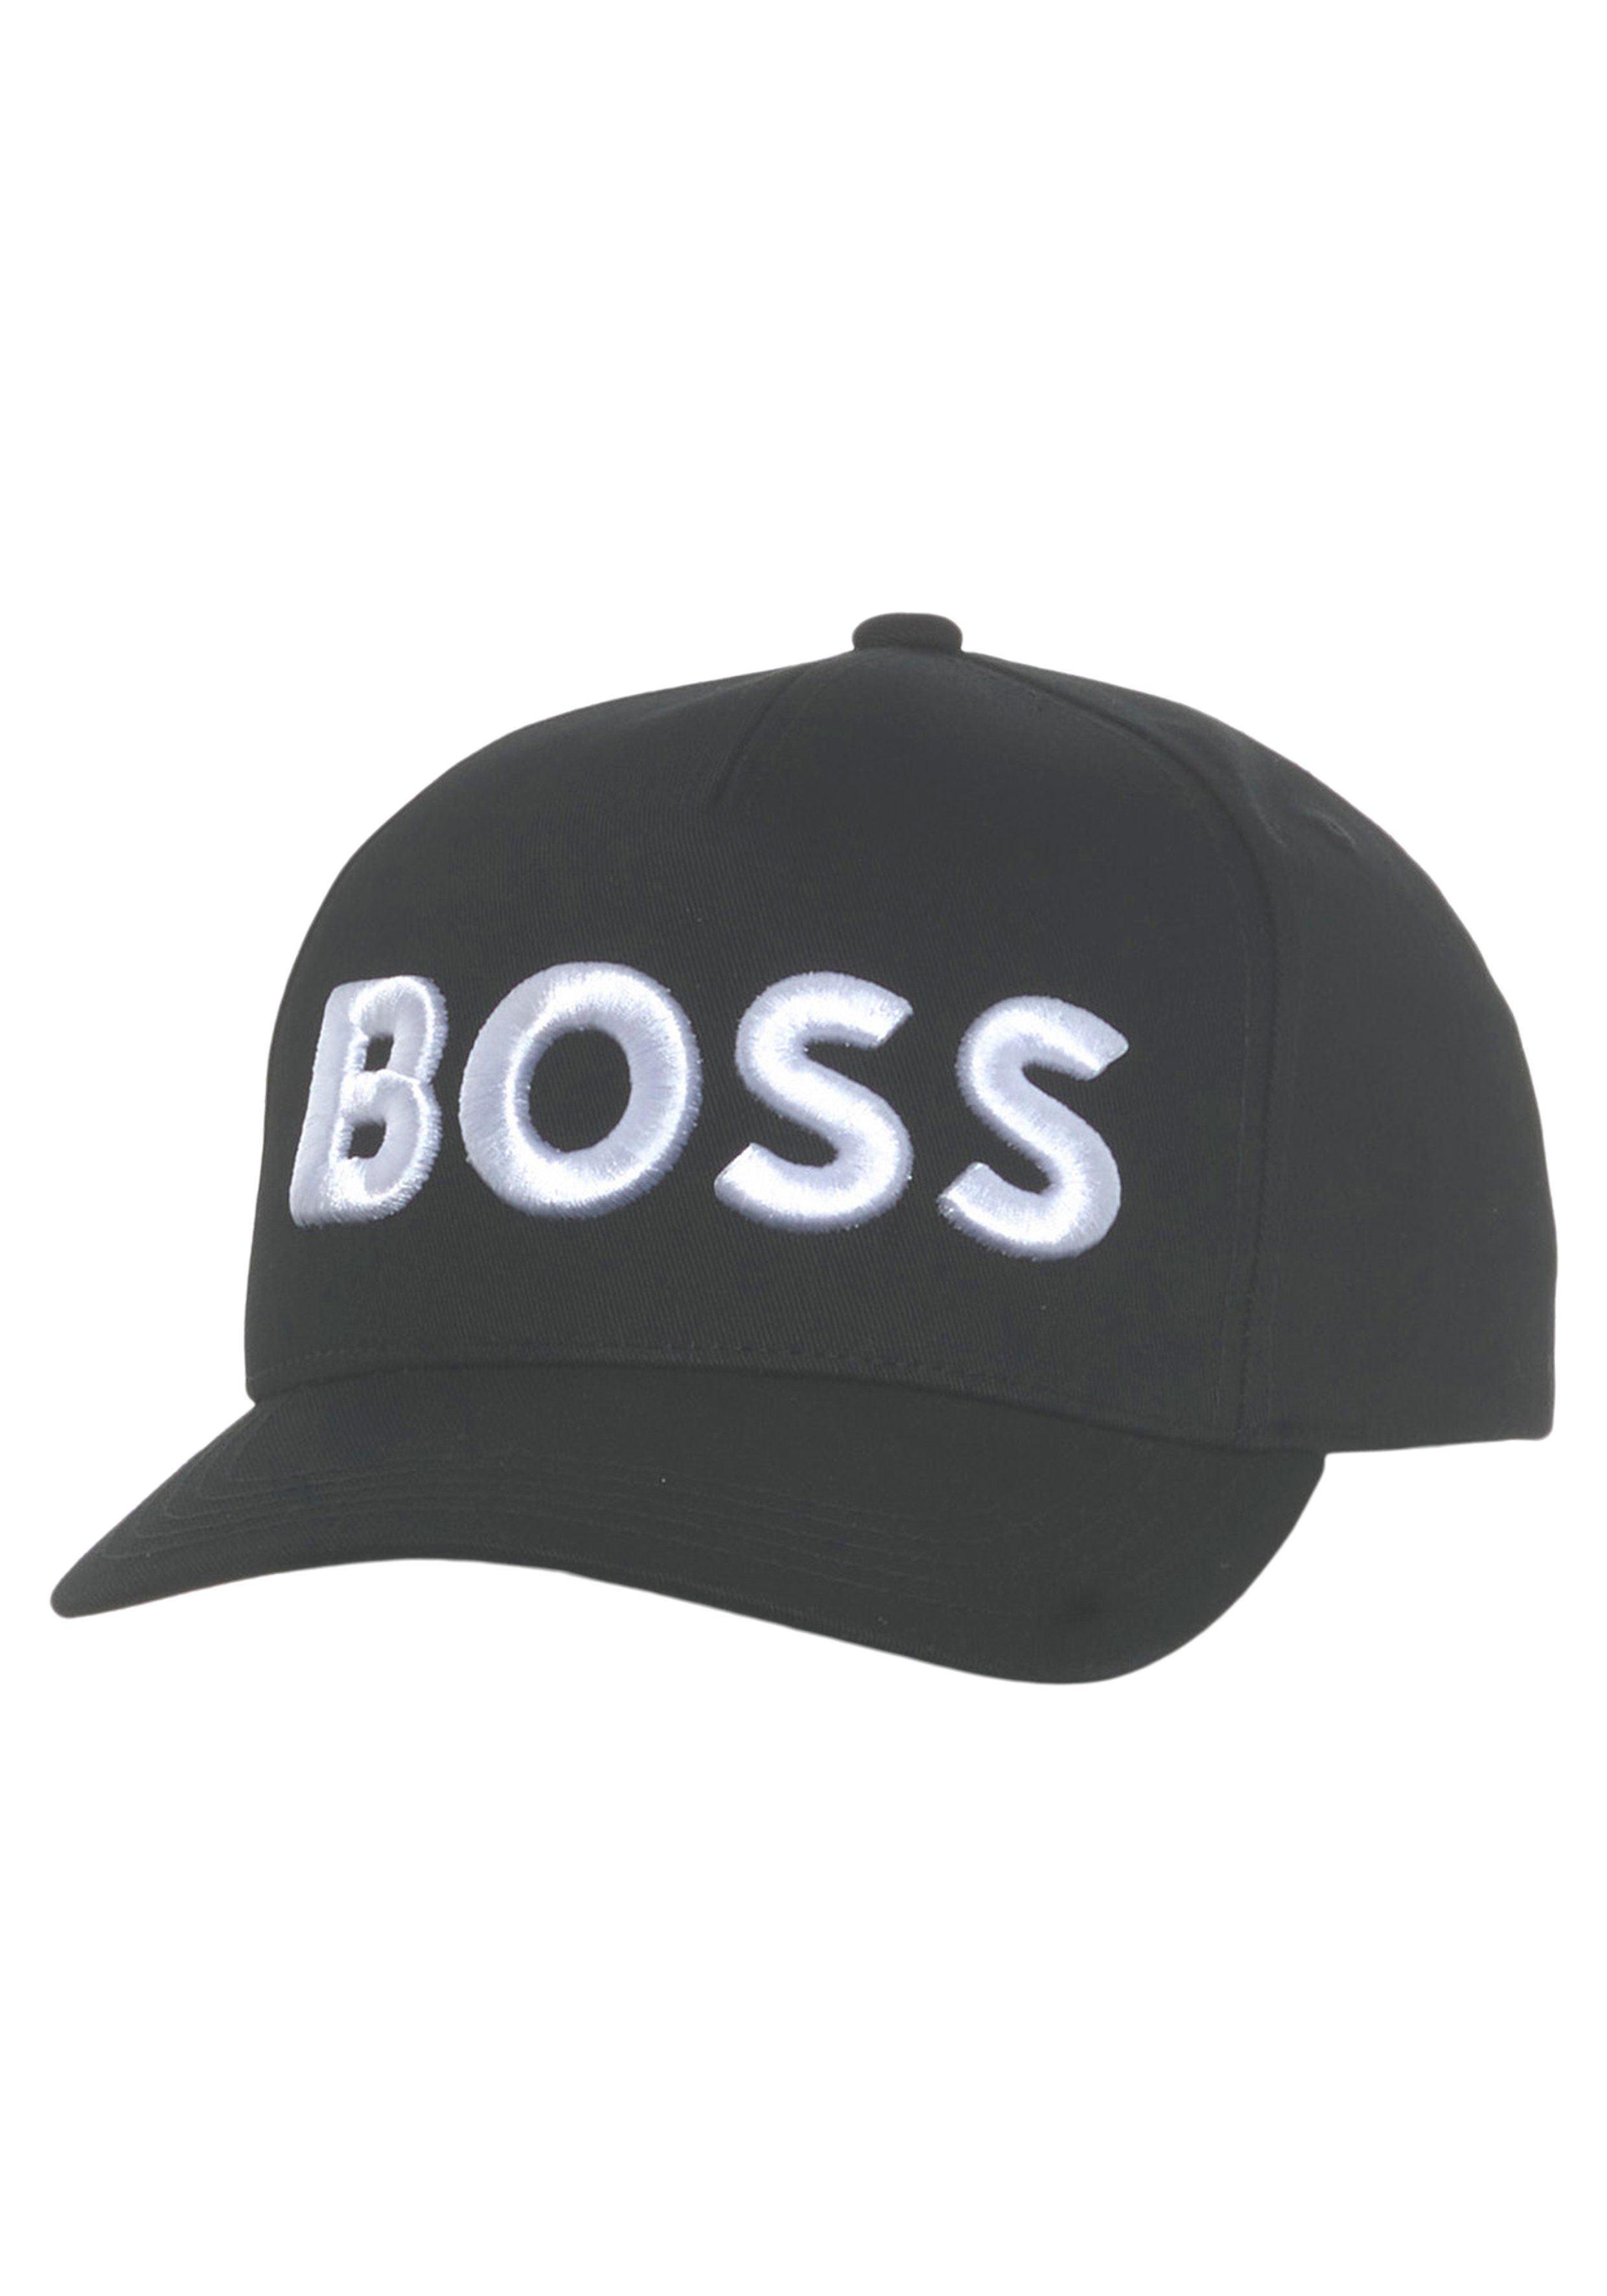 Black kontrastfarbenem Baseball BOSS Sevile-BOSS-6 Cap mit Labelschriftzug